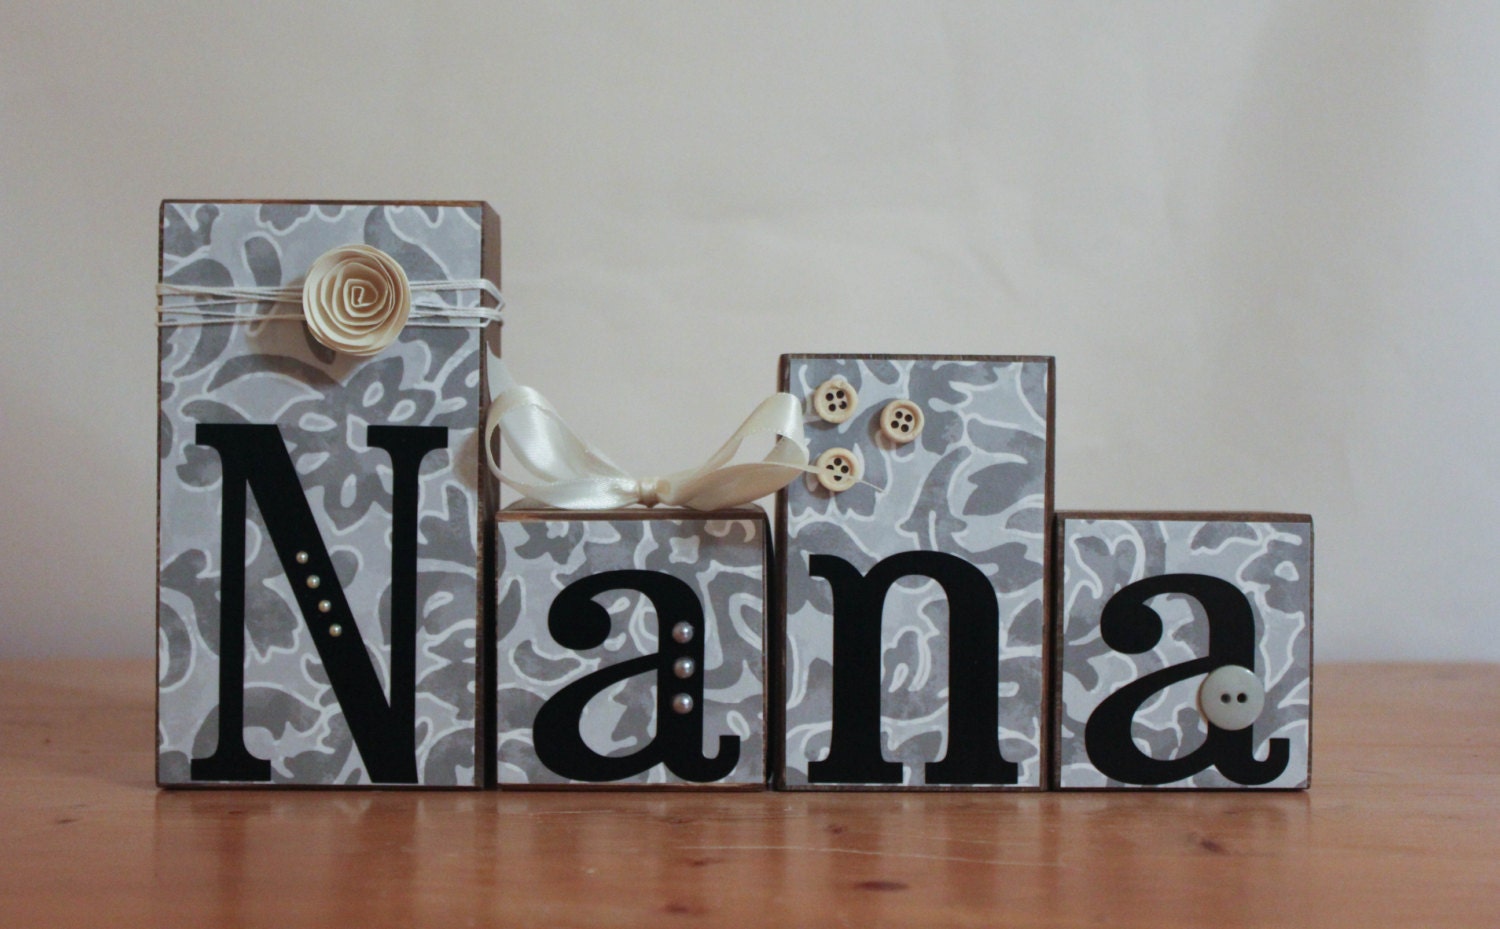 Nana Gift Gift for Nana Wood Blocks Personalized Nana Gift